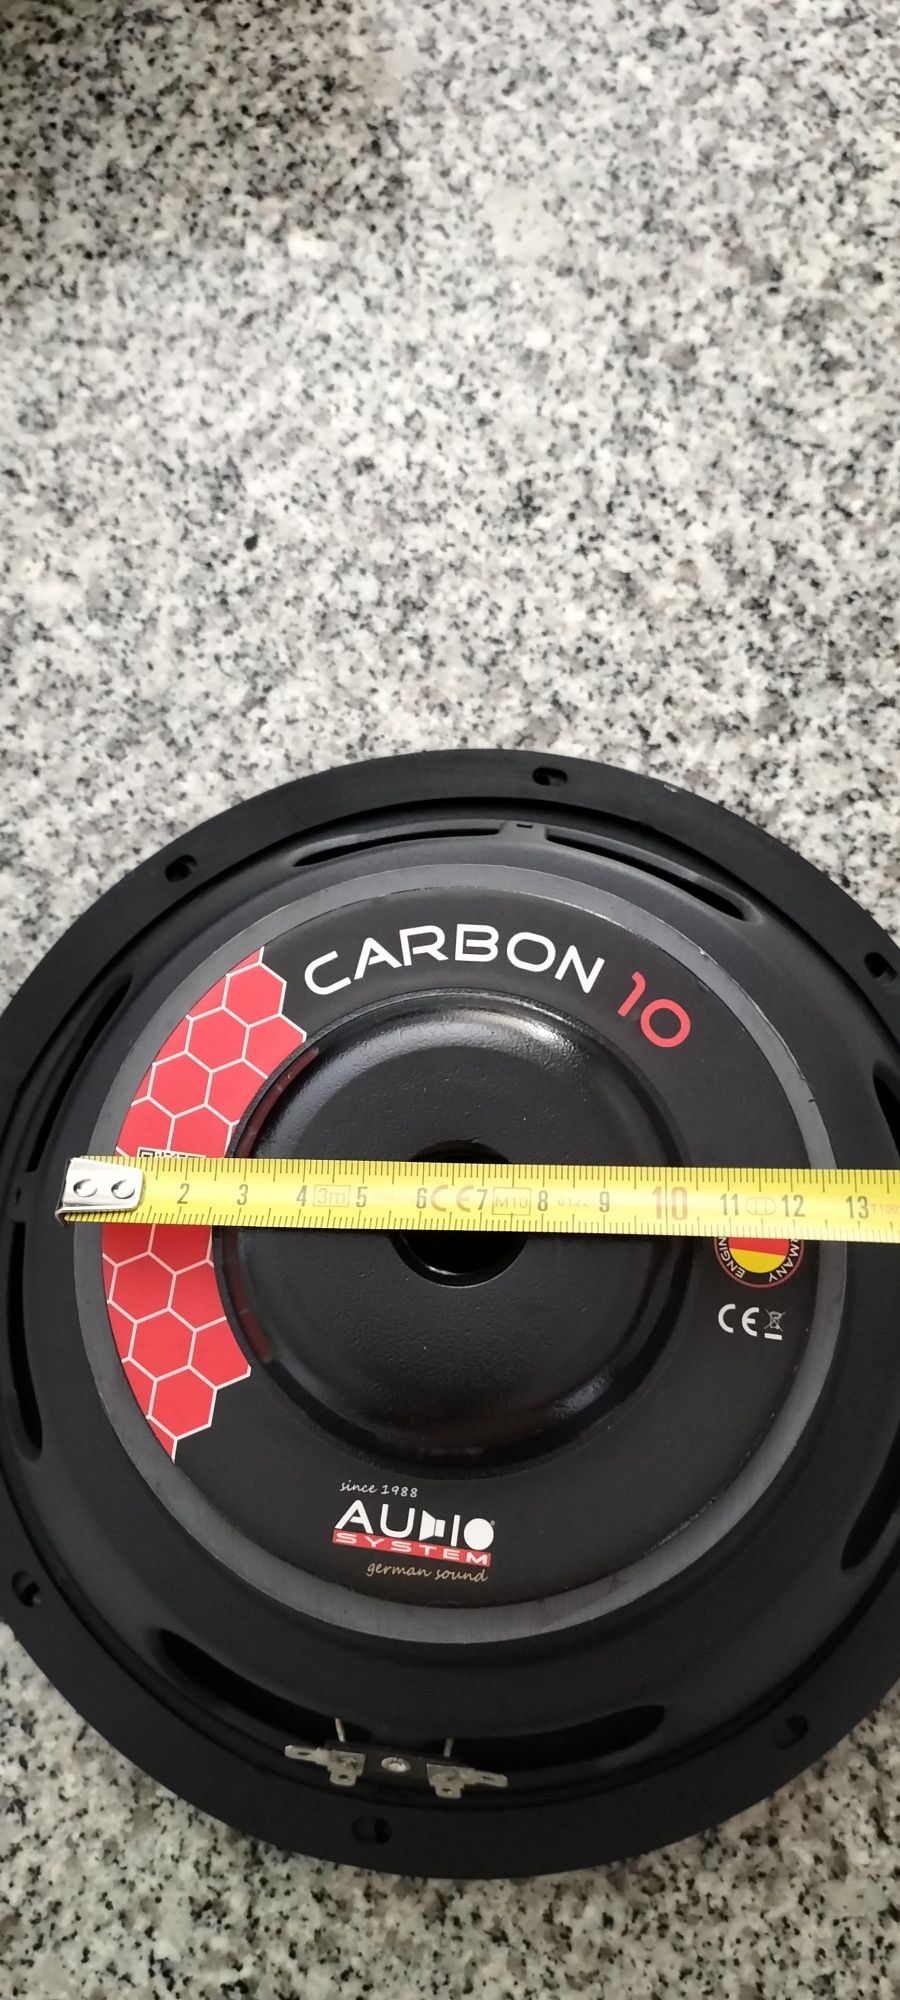 Subwoofer Audio system carbon 10.